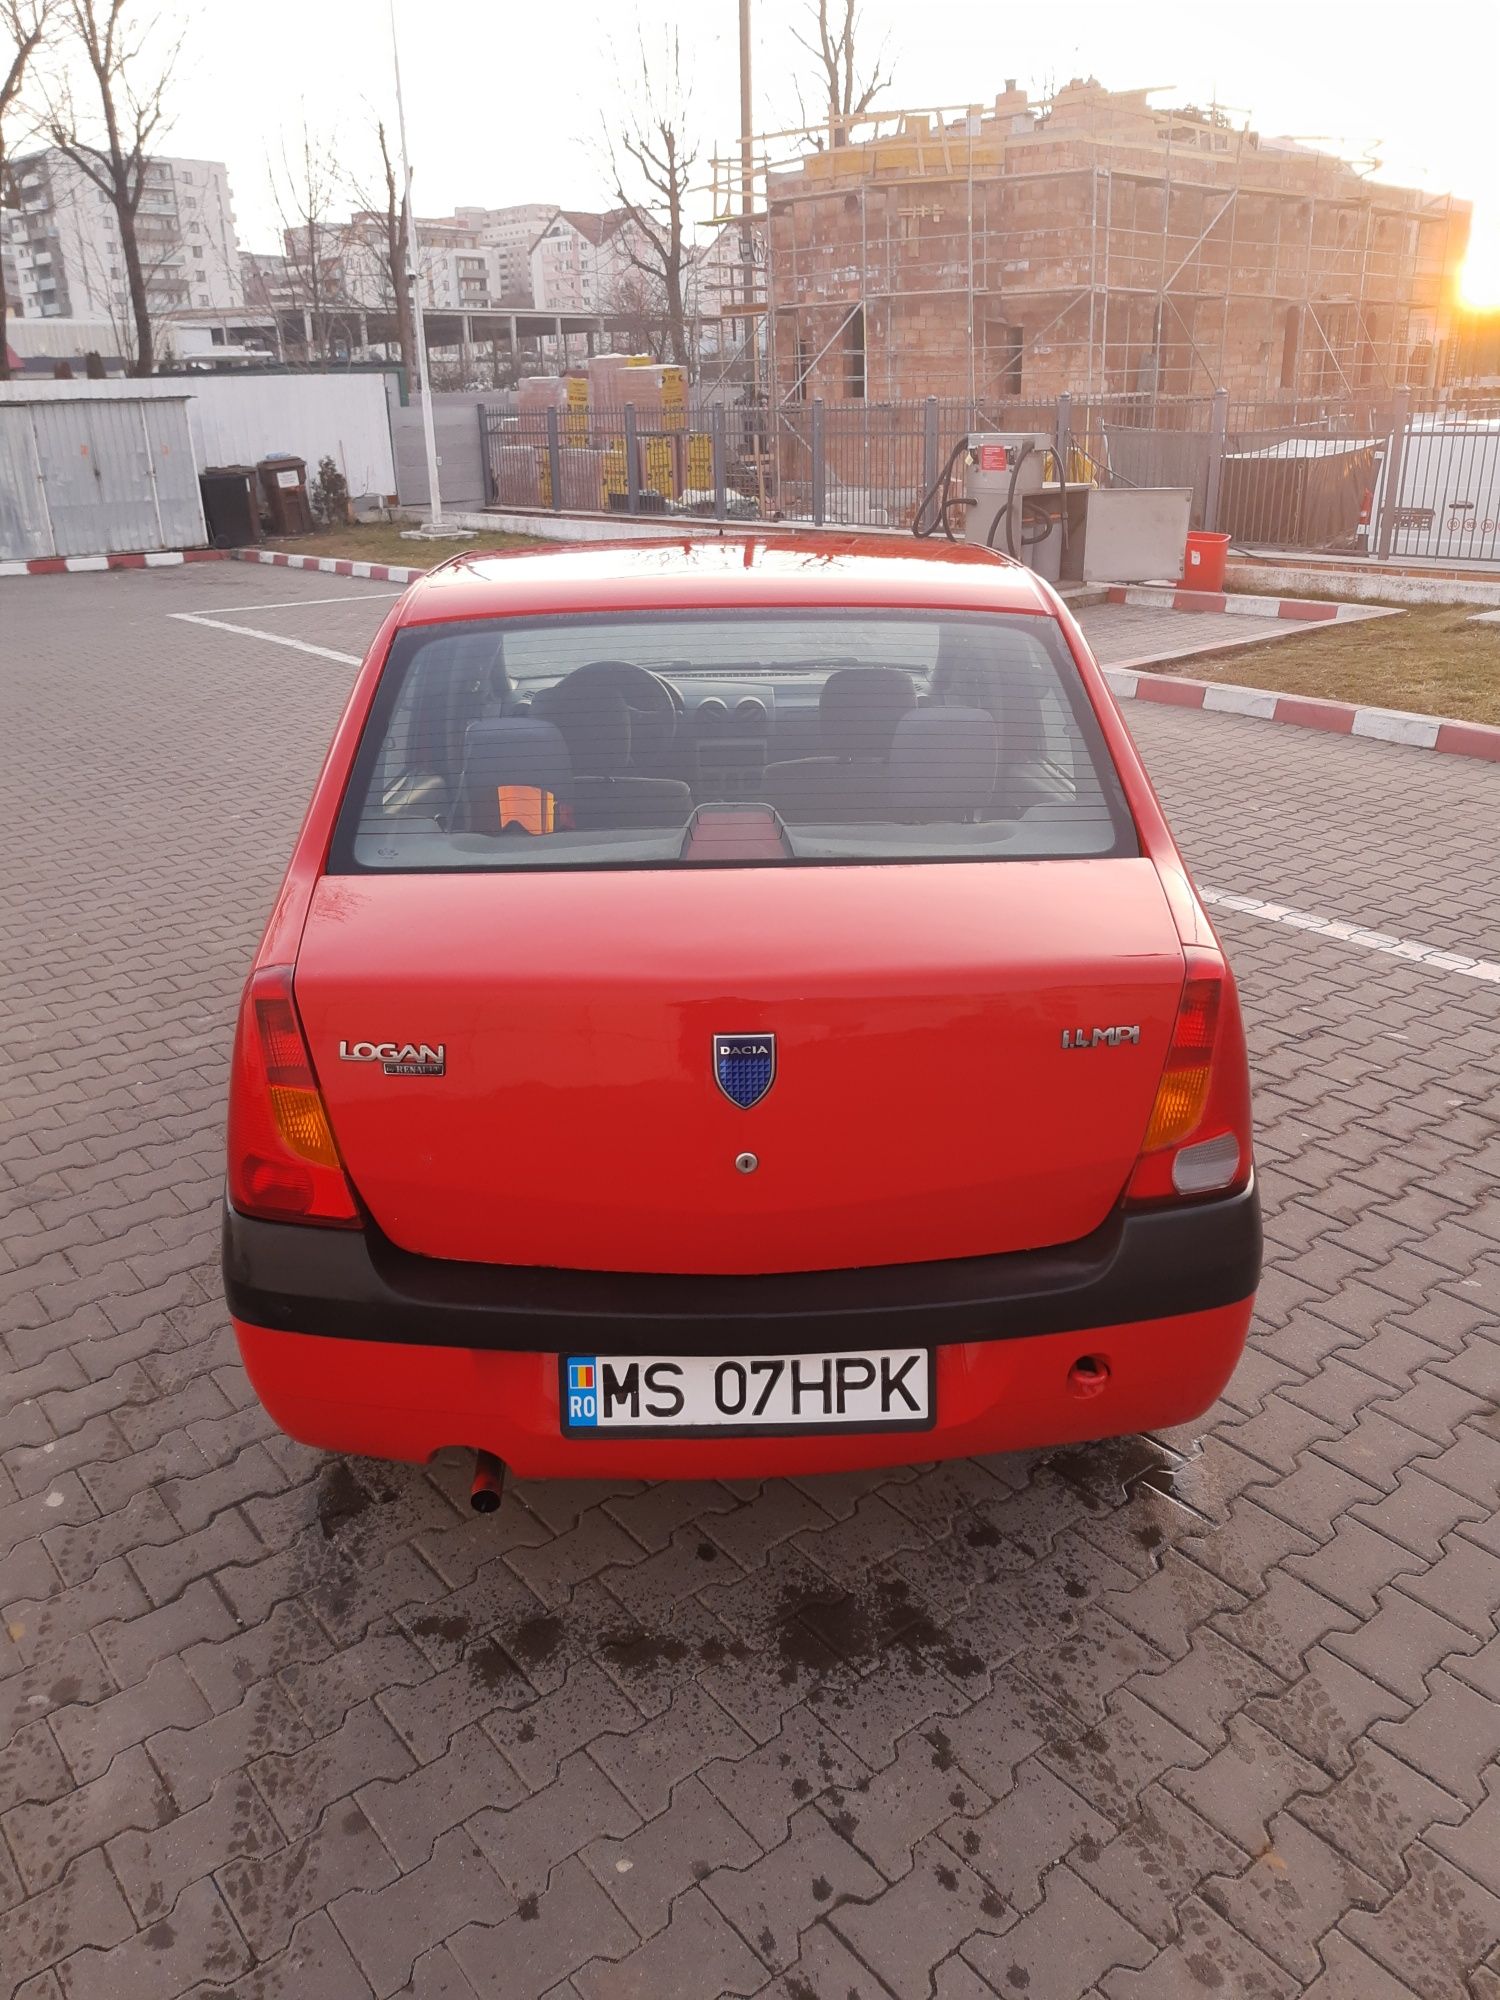 Dacia Logan 1.4 benzina, cumparata din reprezentanta, unic proprietar